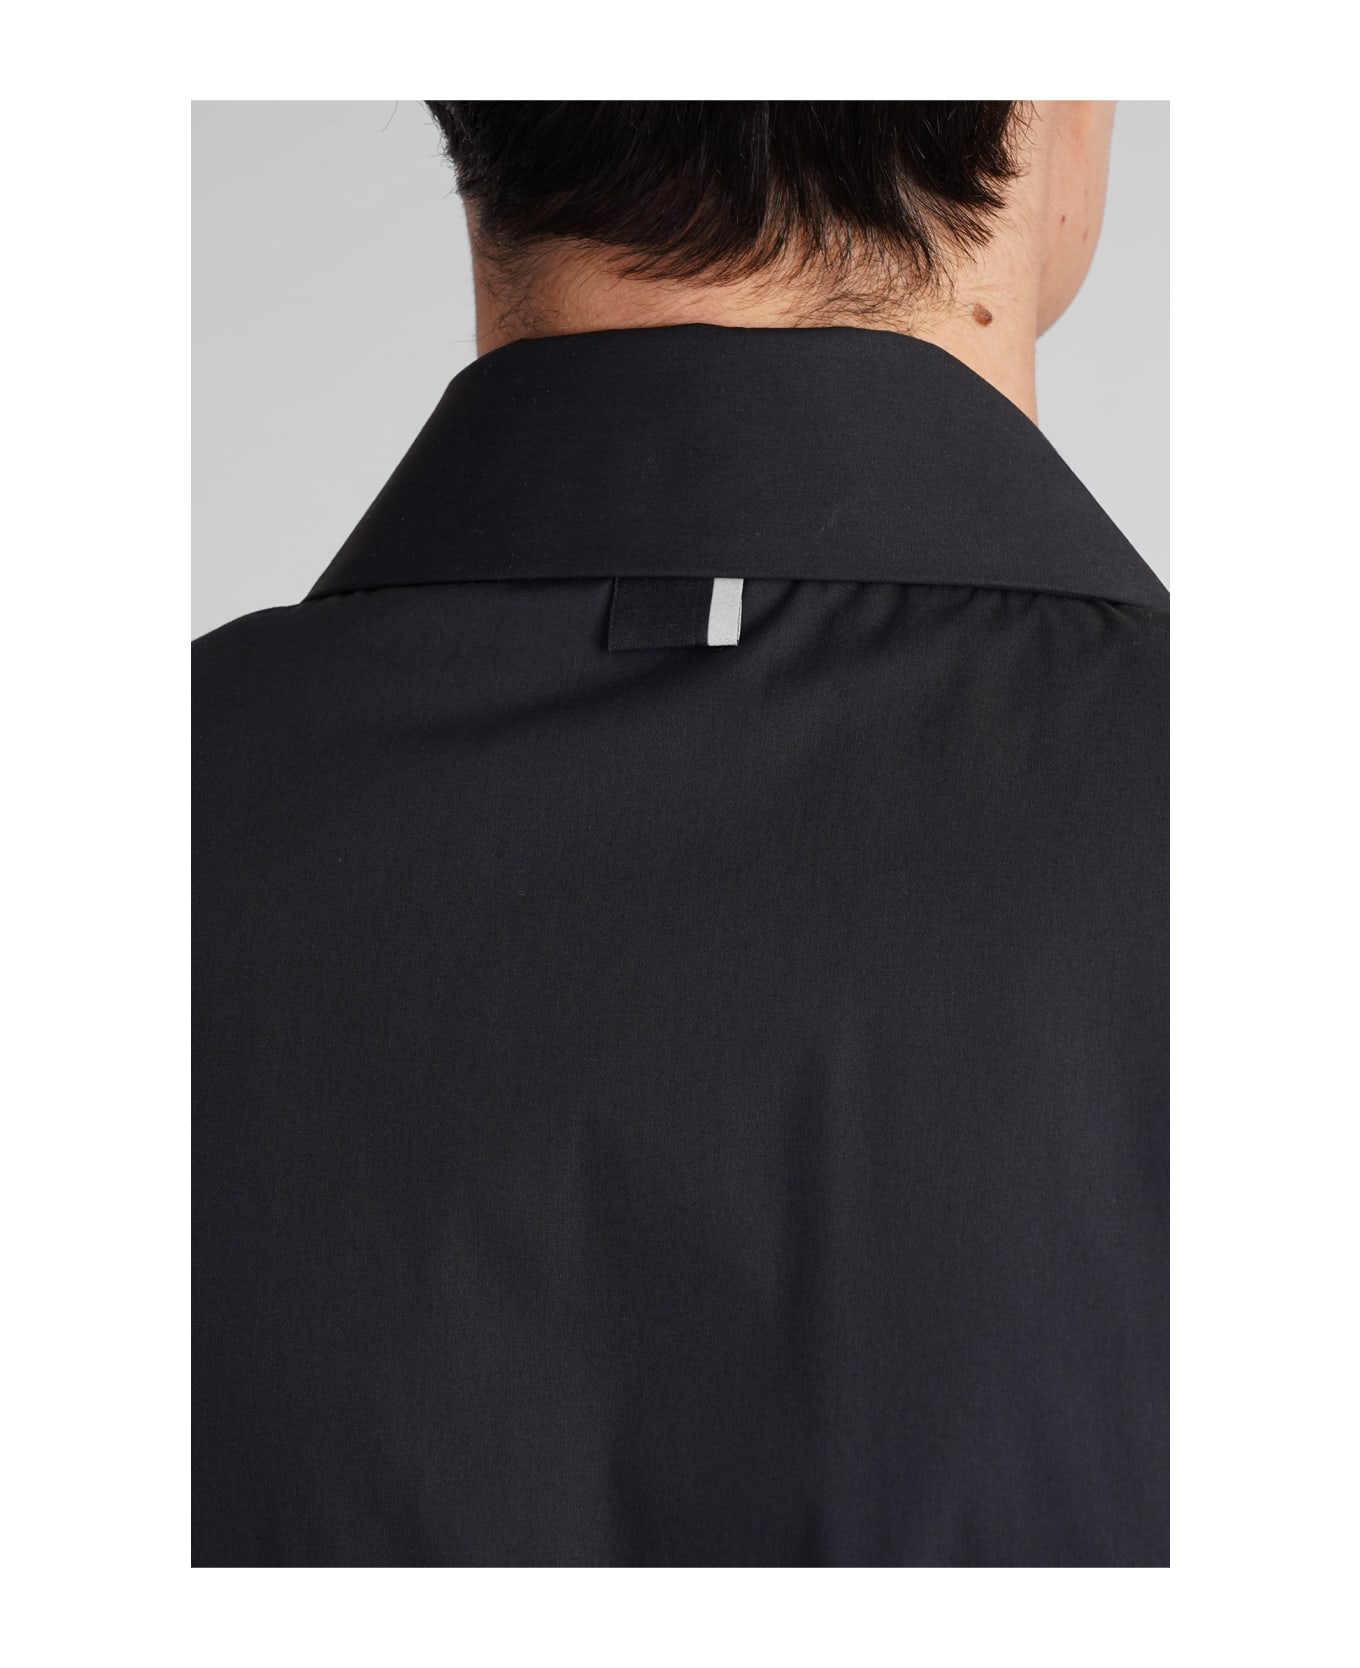 Low Brand Shirt Zip S143 Shirt In Black Cotton - black シャツ